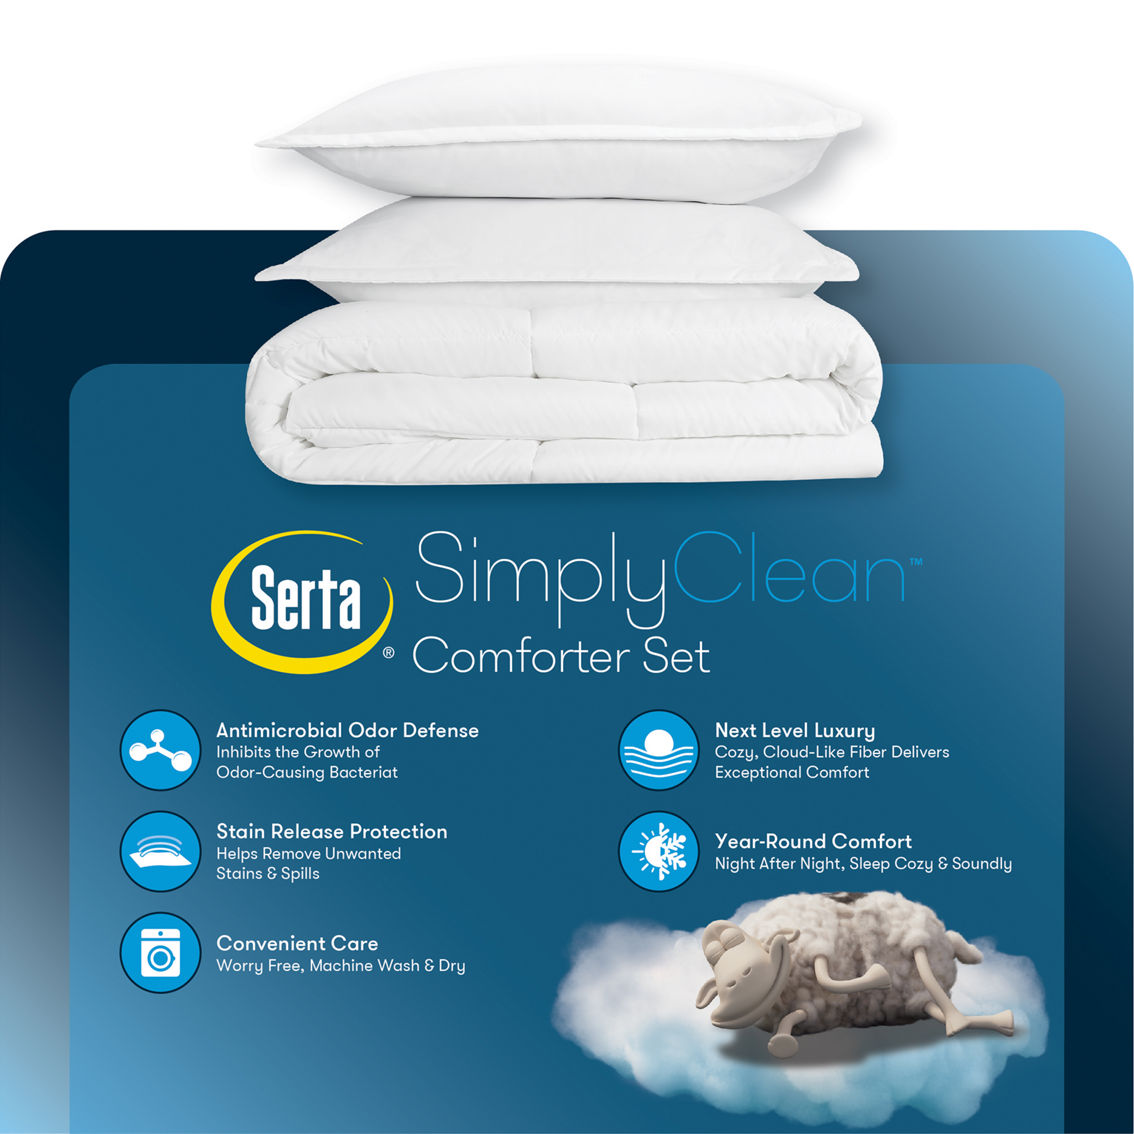 Serta Simply Clean Comforter Set - Image 5 of 5